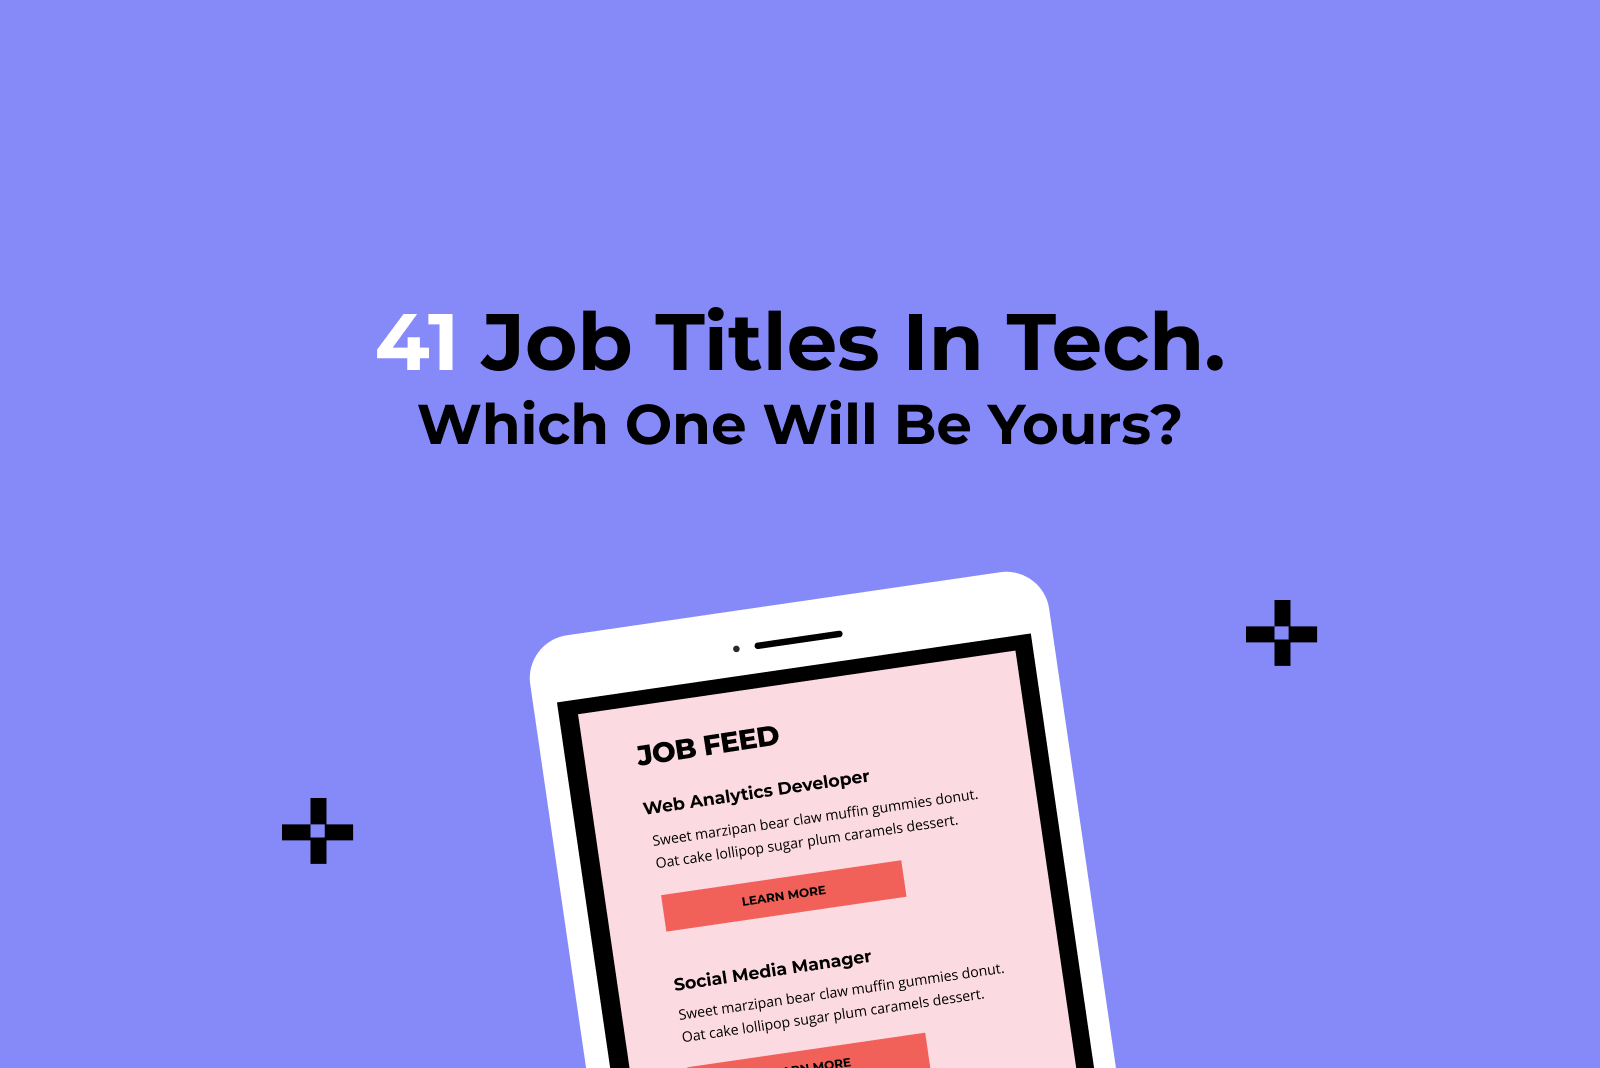 41 Job Titles in Tech